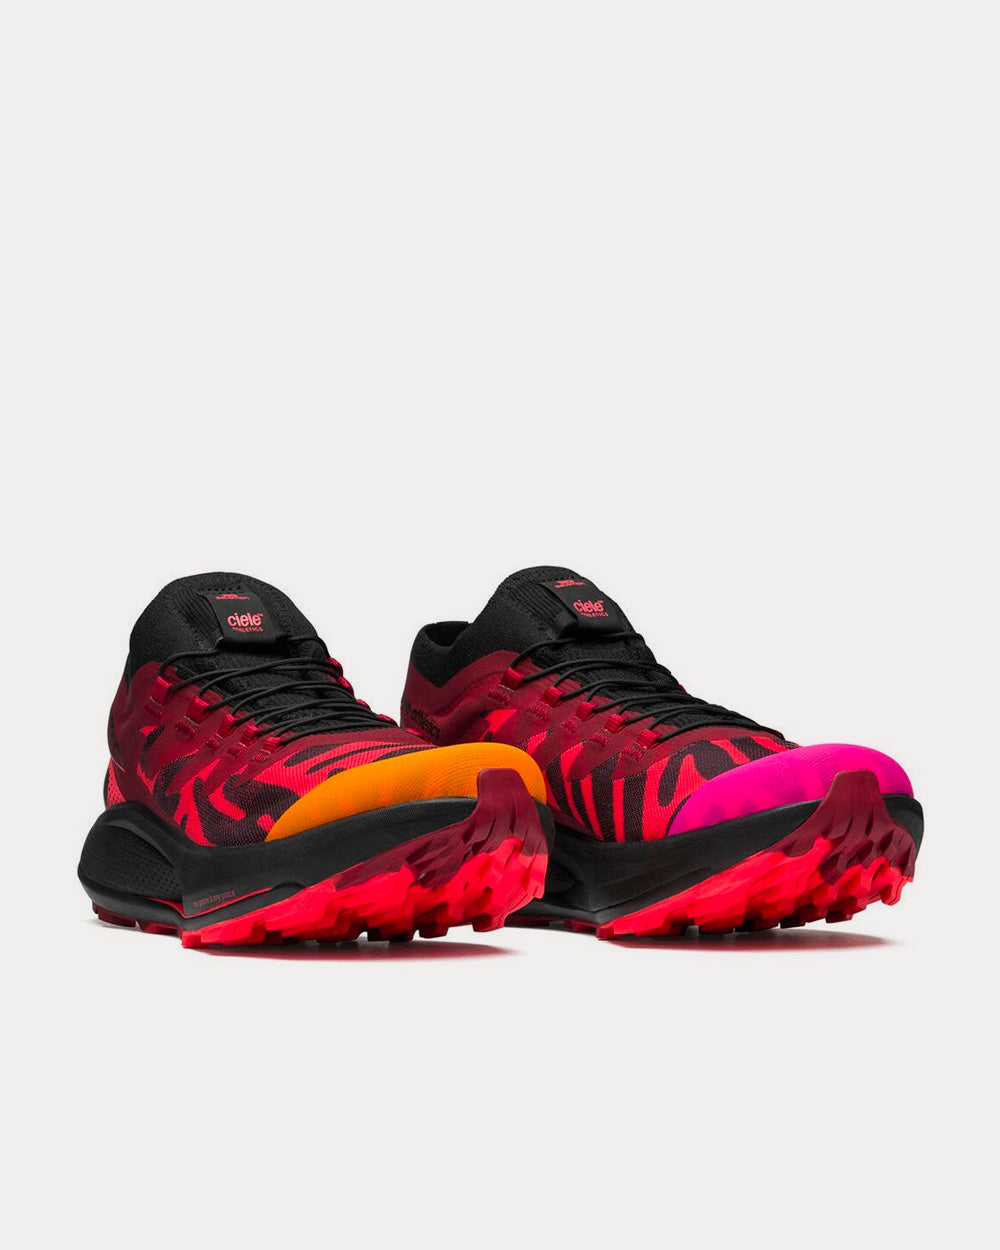 Salomon x Ciele Athletics - Pulsar Trail Pro Black / Fiery Coral / Poppy Red Running Shoes